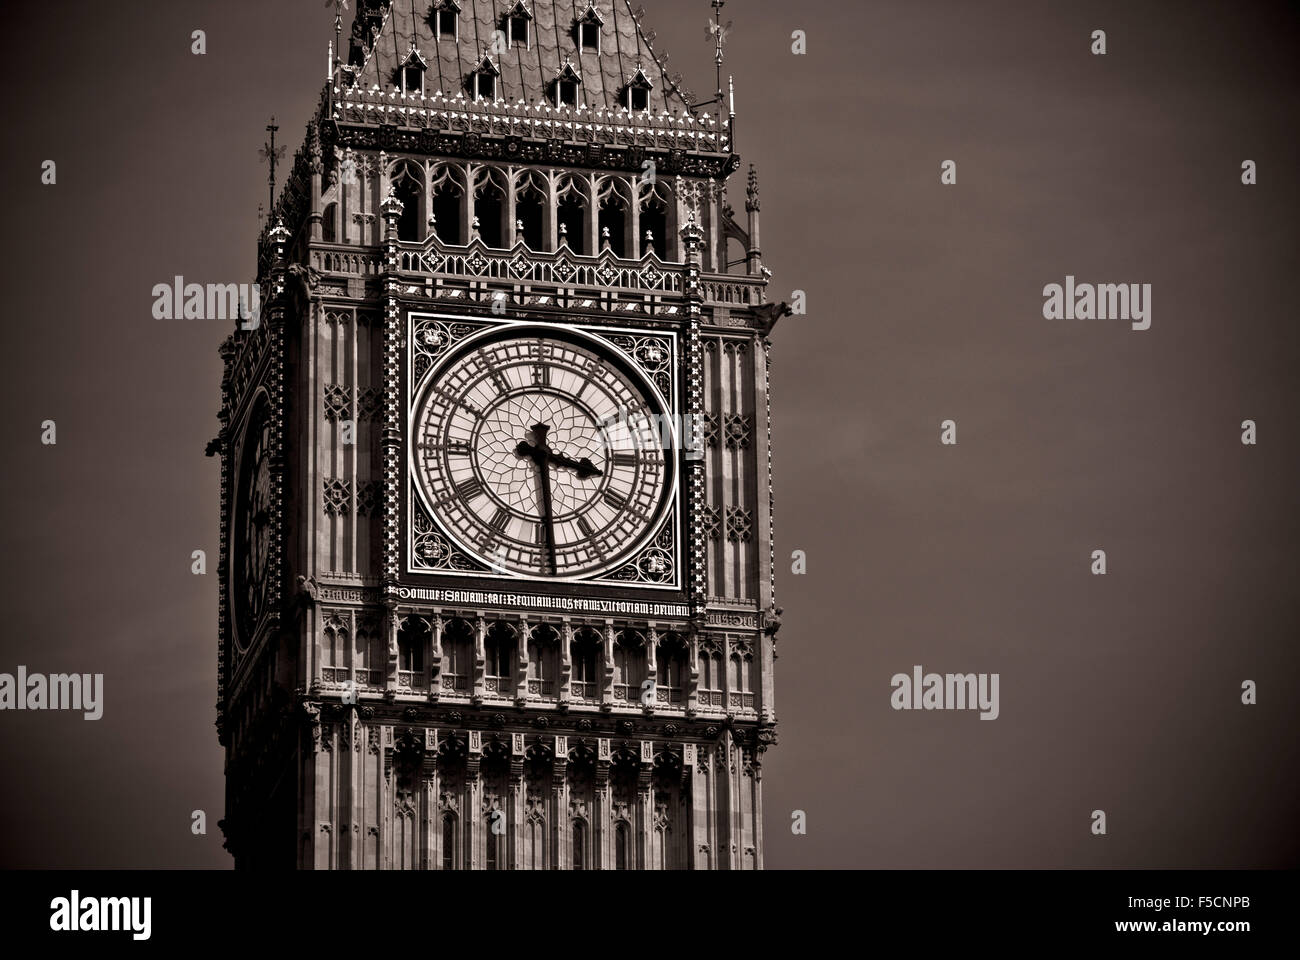 Big Ben tower clock, London, UK Stock Photo